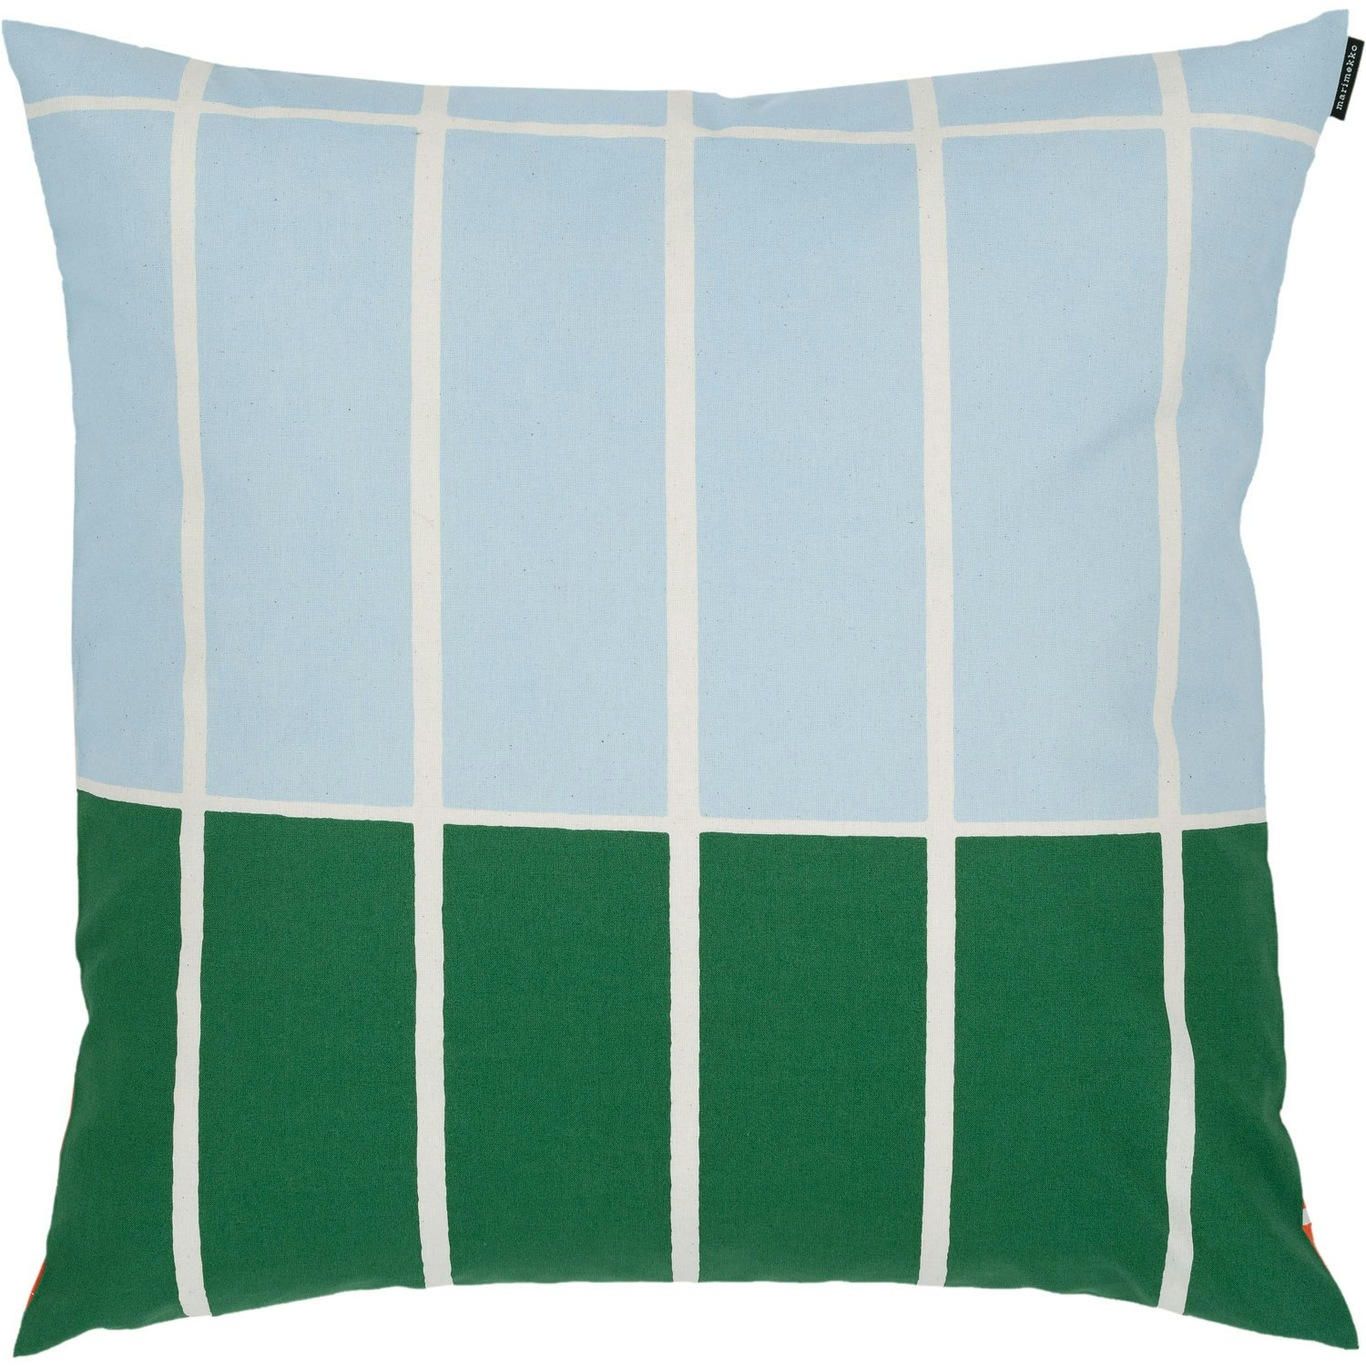 Tiiliskivi Cushion Cover 50x50 cm, Orange / Light Blue / Green